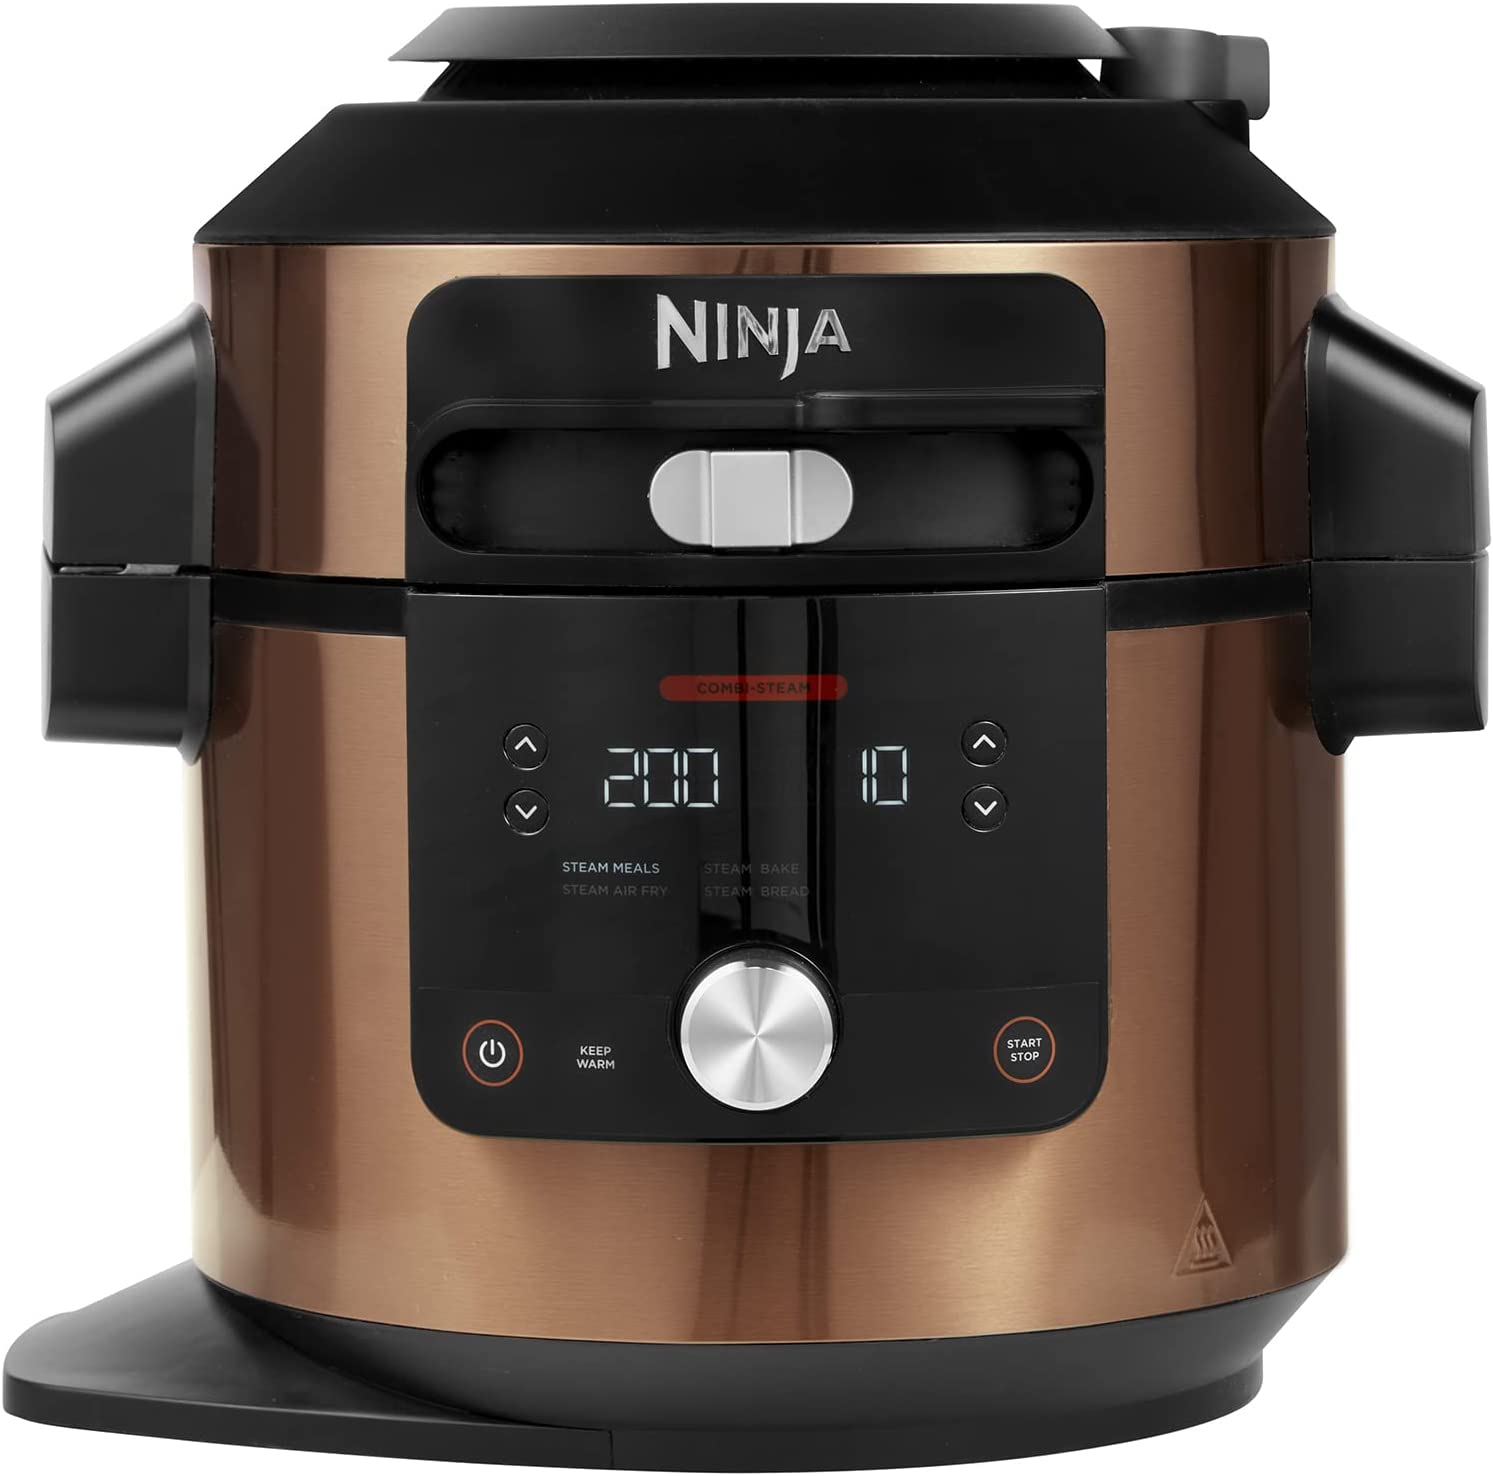 Ninja Foodi MAX 14-in-1 SmartLid Multi-Cooker